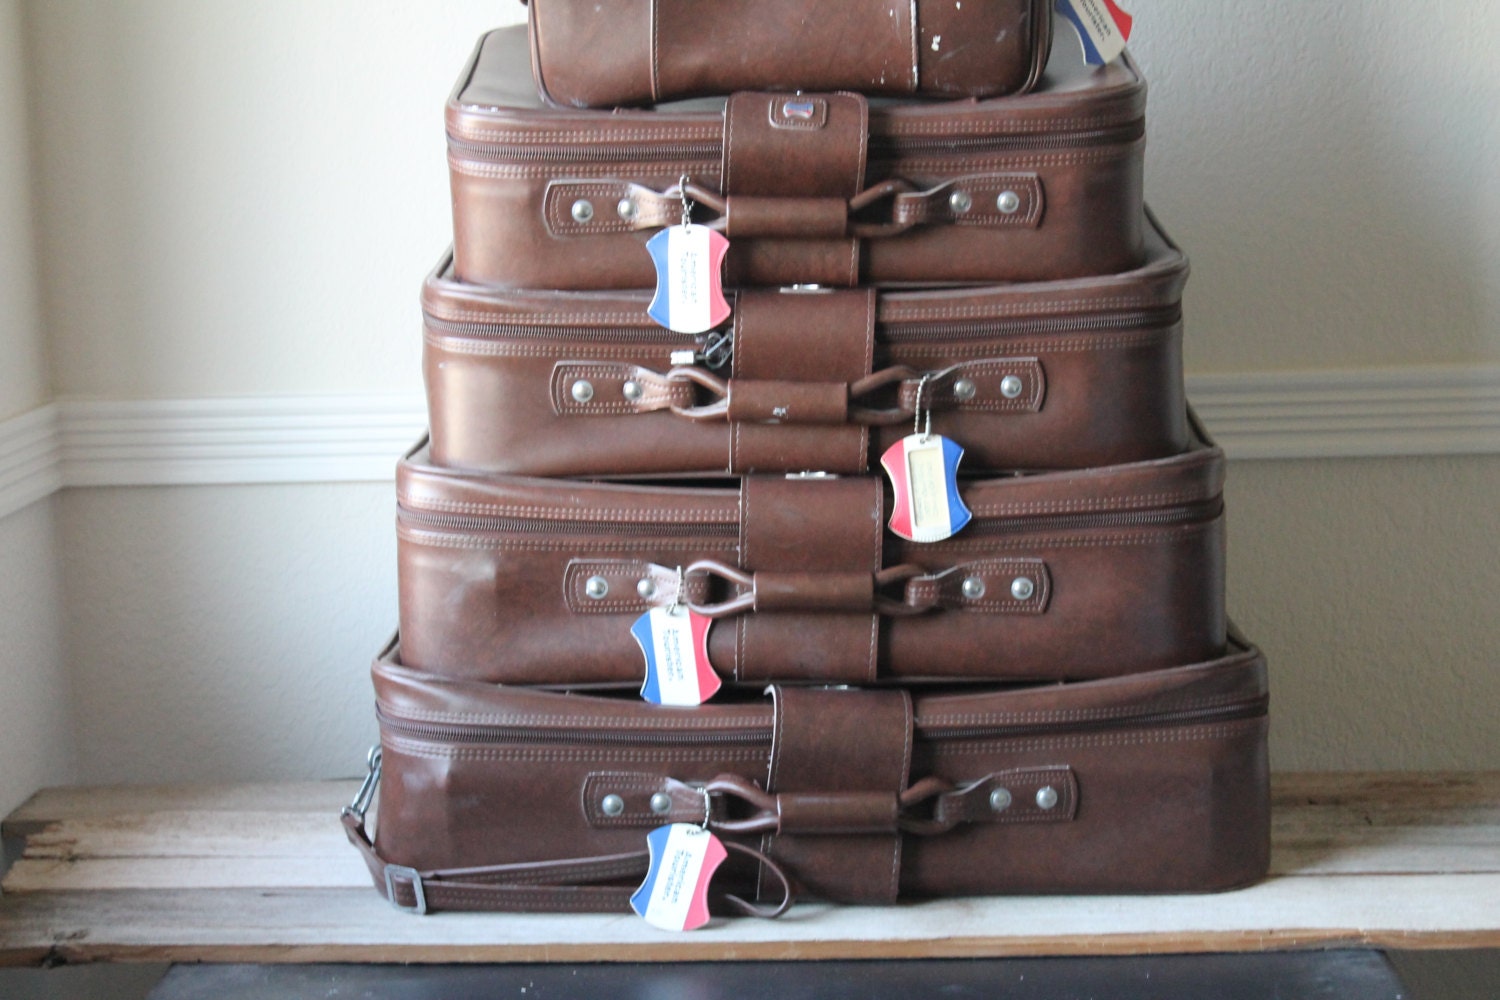 american tourister luggage set